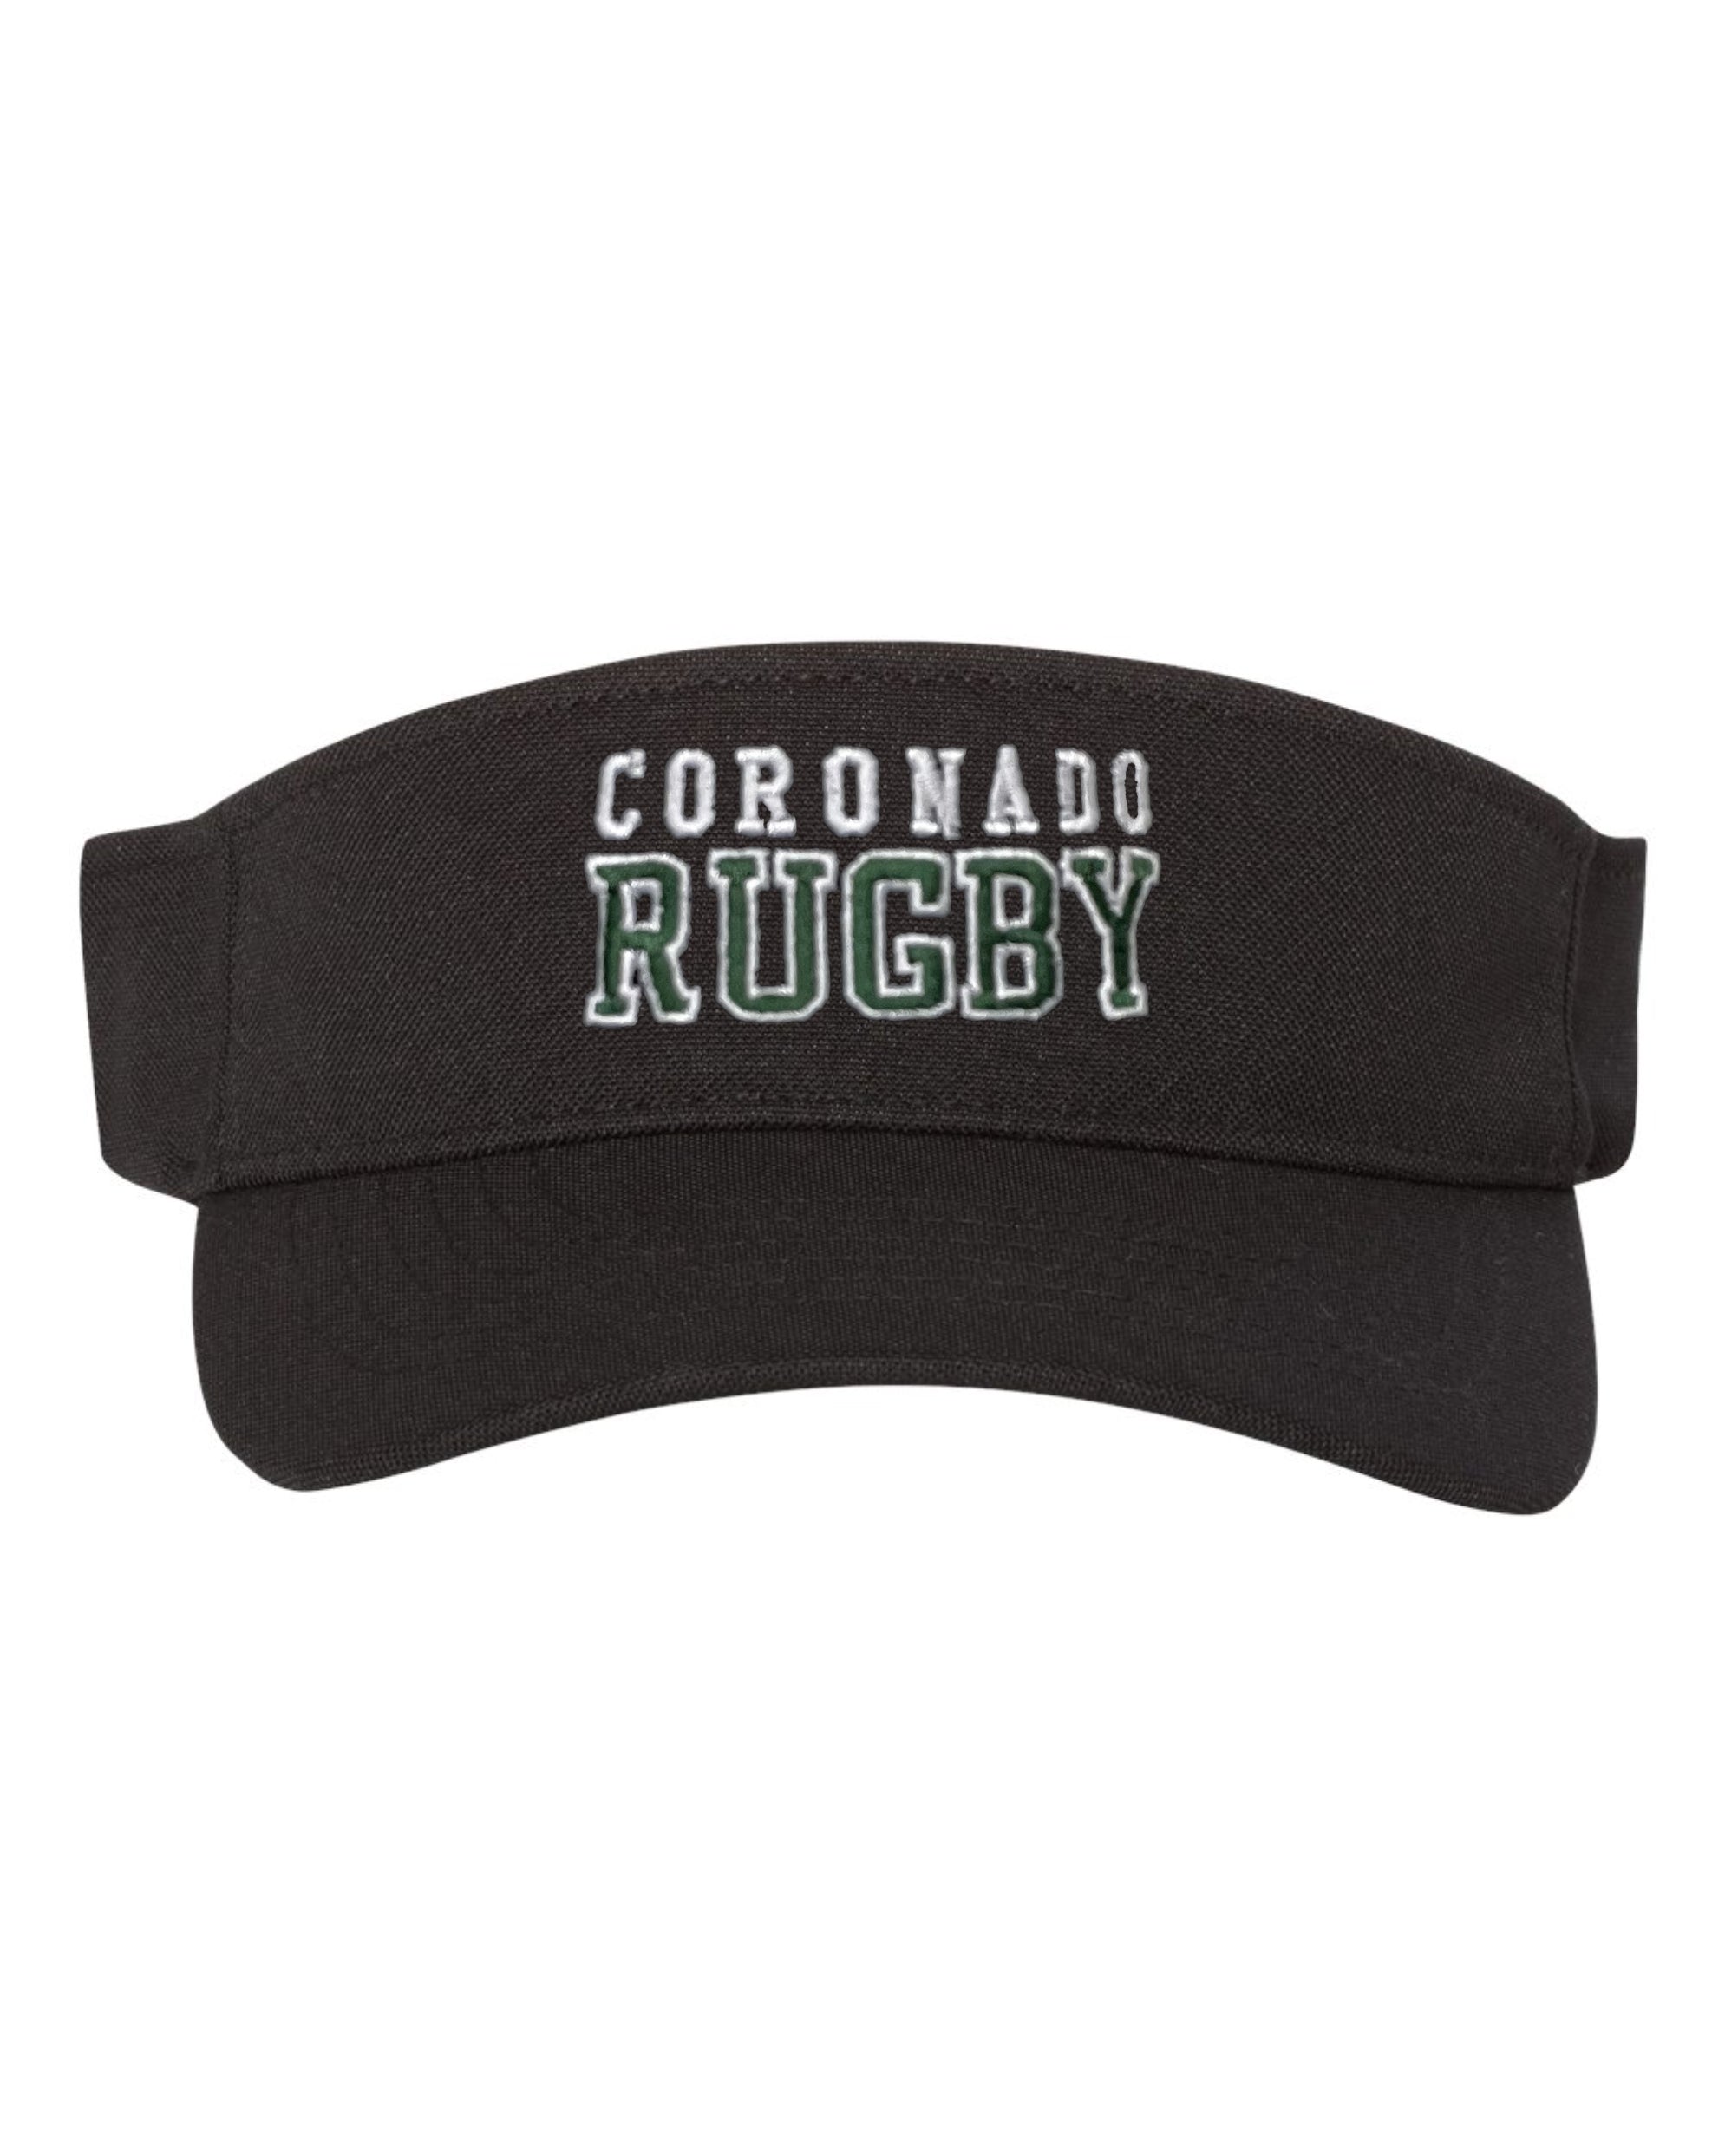 Coronado Rugby Visors